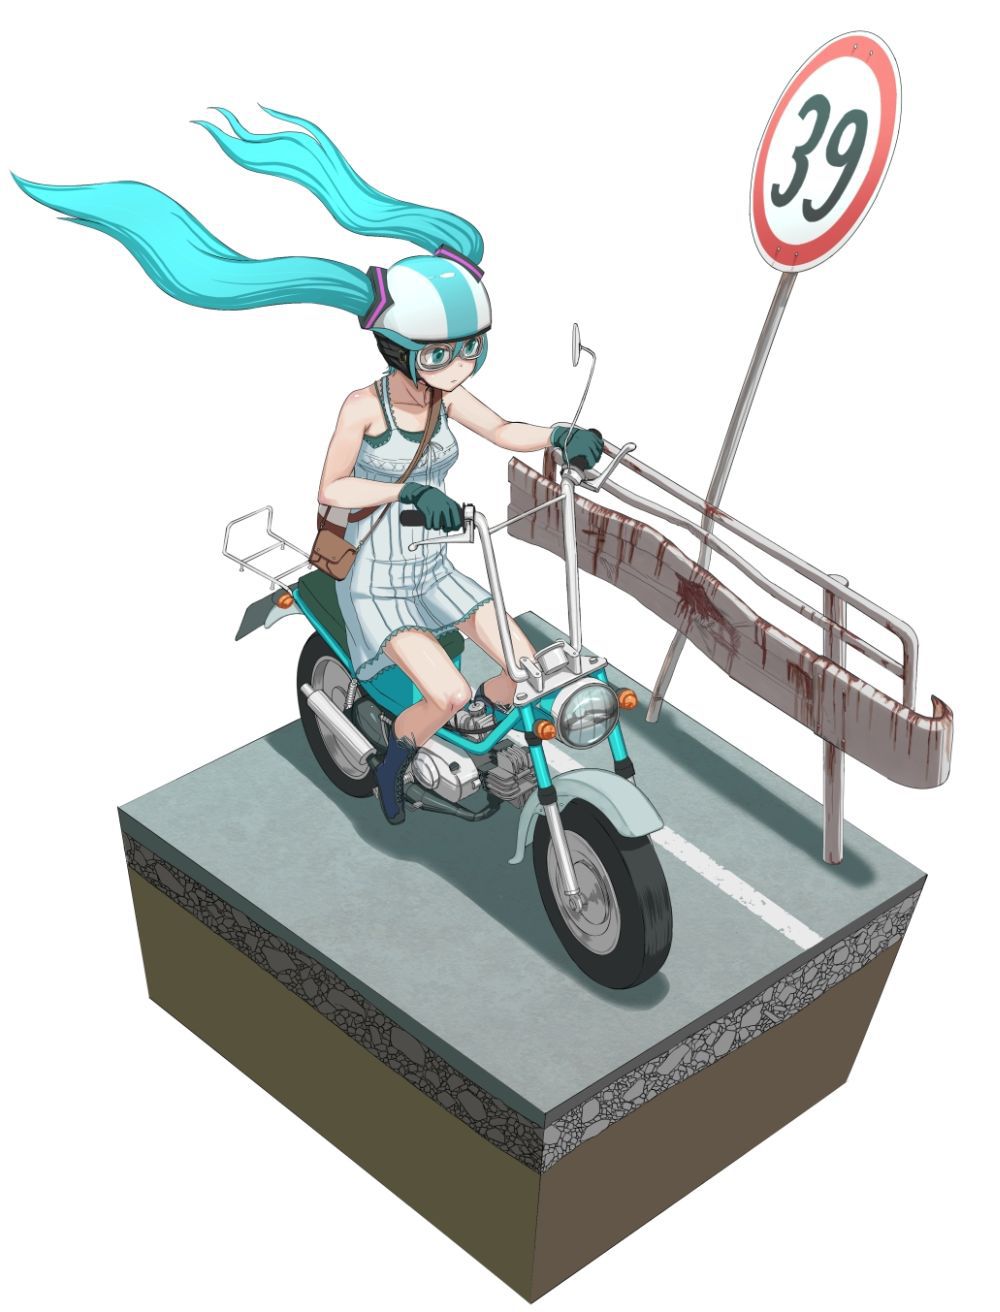 [Secondary] 可愛kattari, sometimes to cool girls riding bikes pictures 22